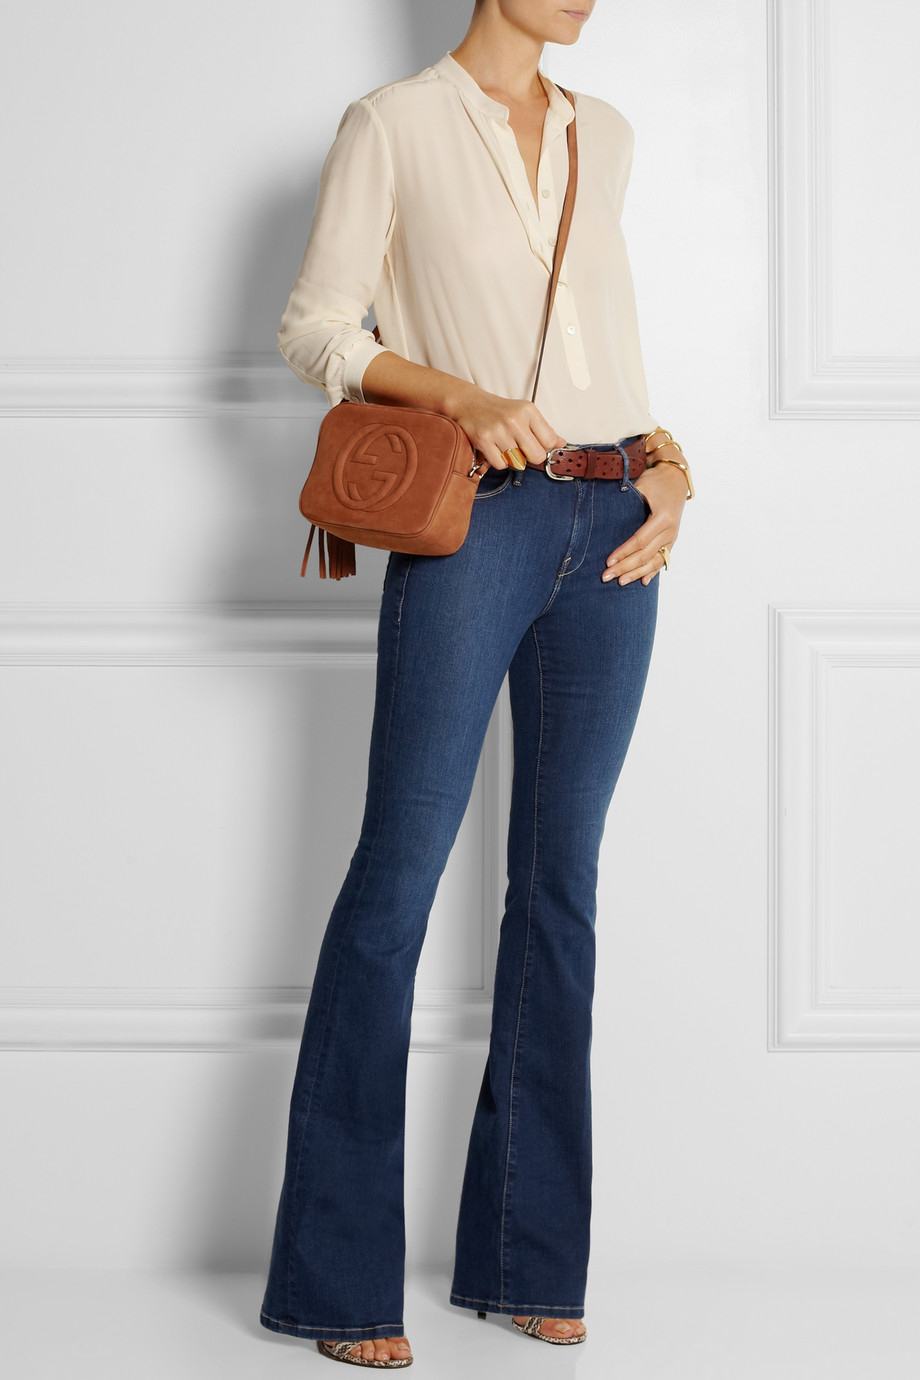 Lyst - Gucci Soho Small Nubuck Shoulder Bag in Brown